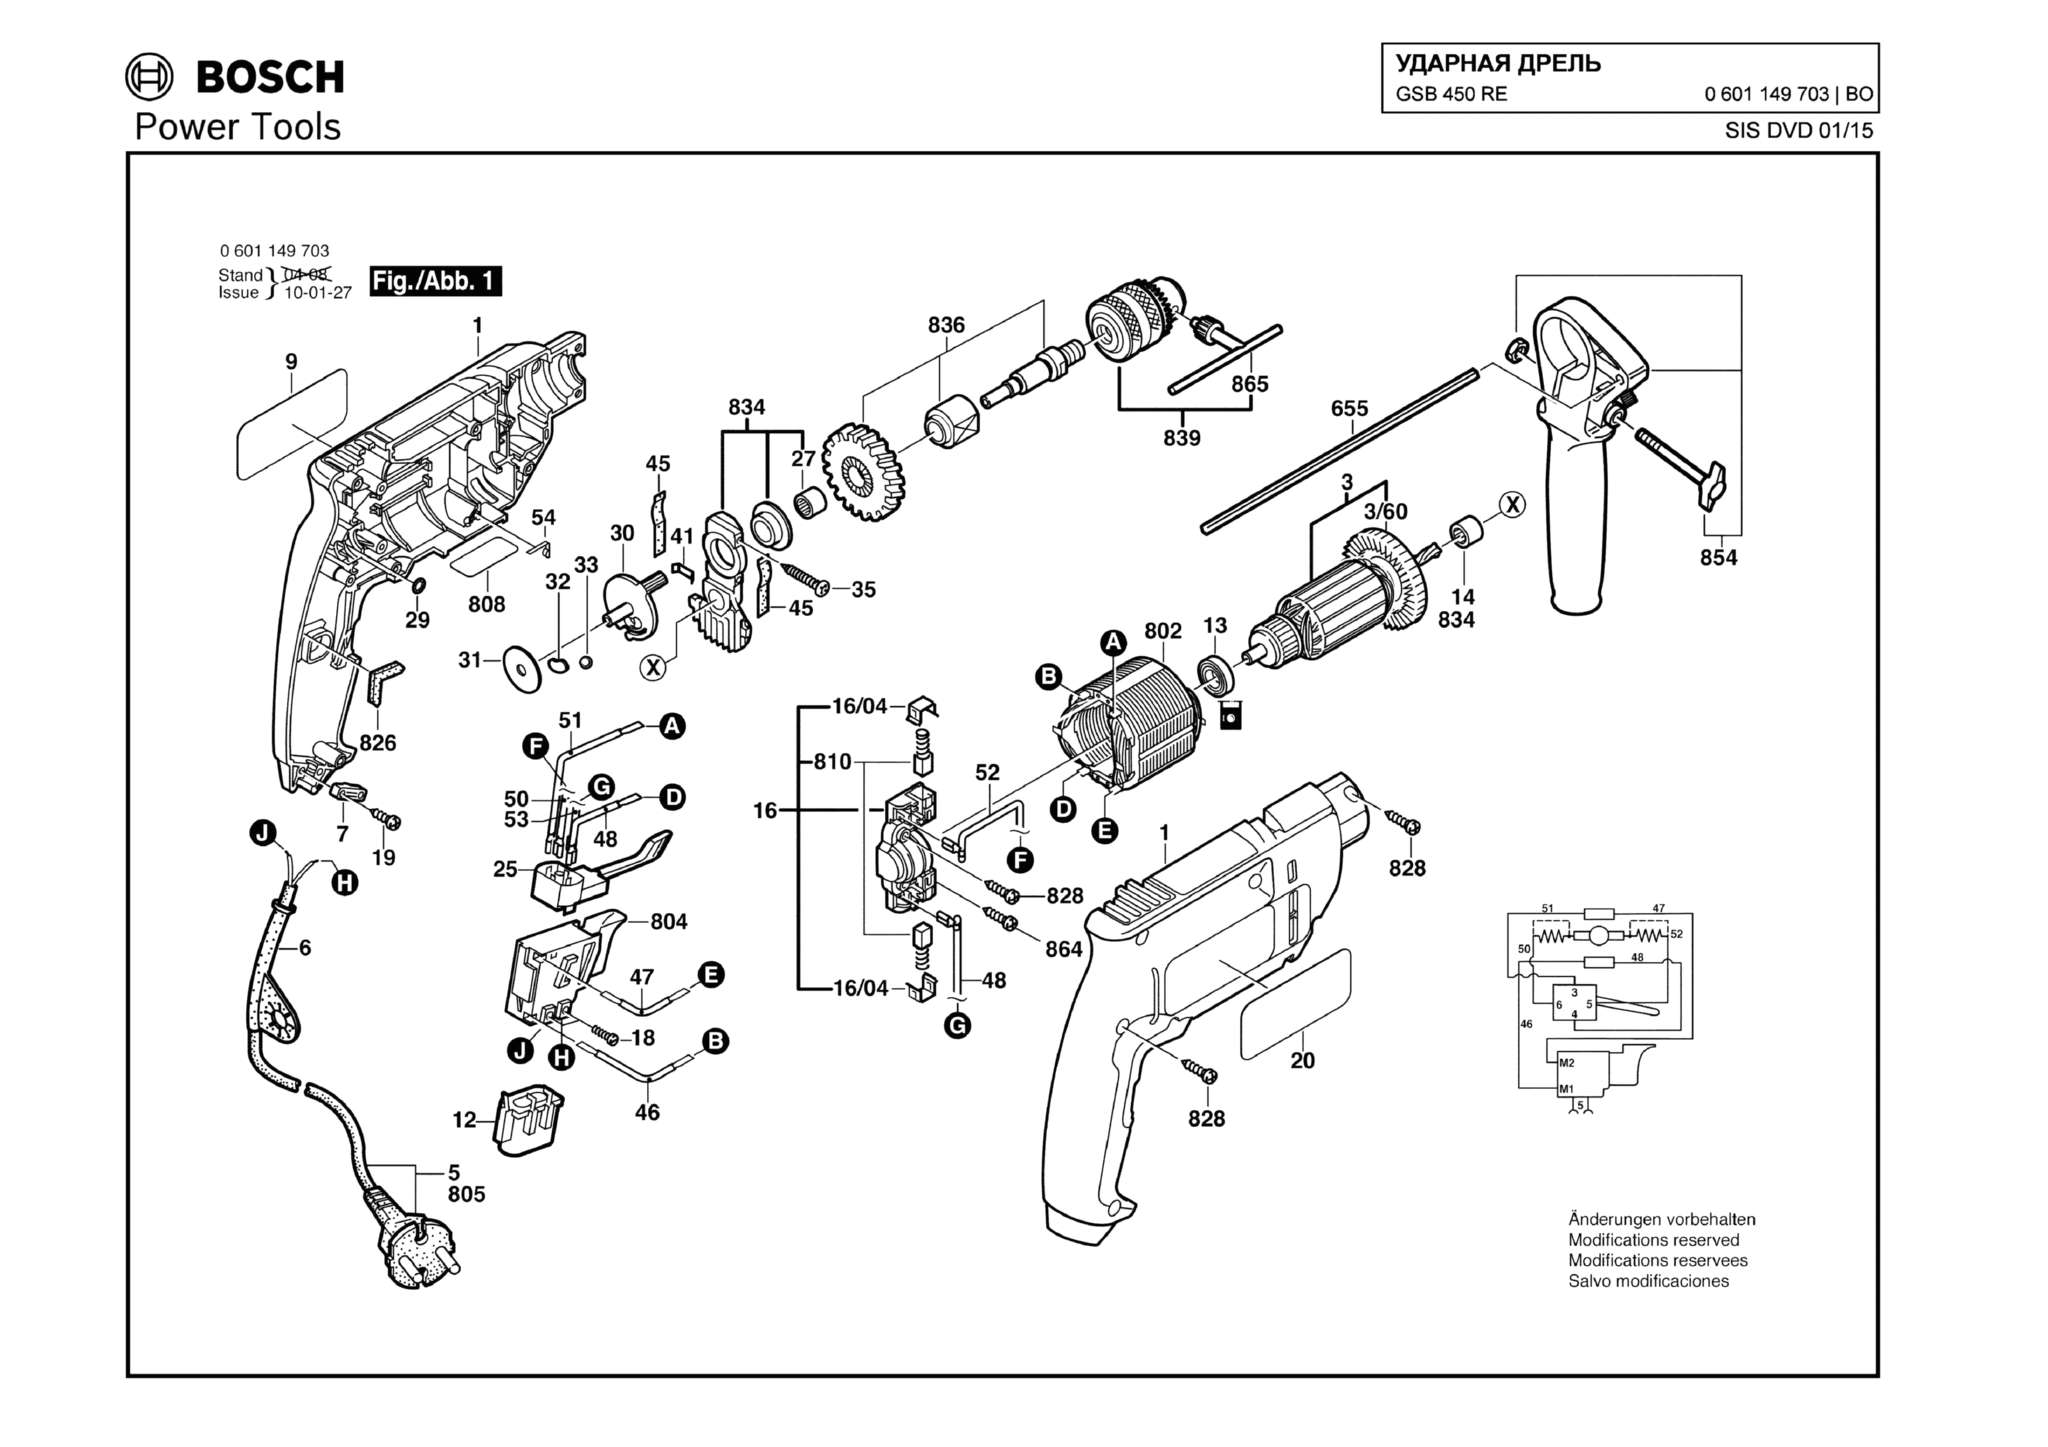 Запчасти, схема и деталировка Bosch GSB 450 RE (ТИП 0601149703)